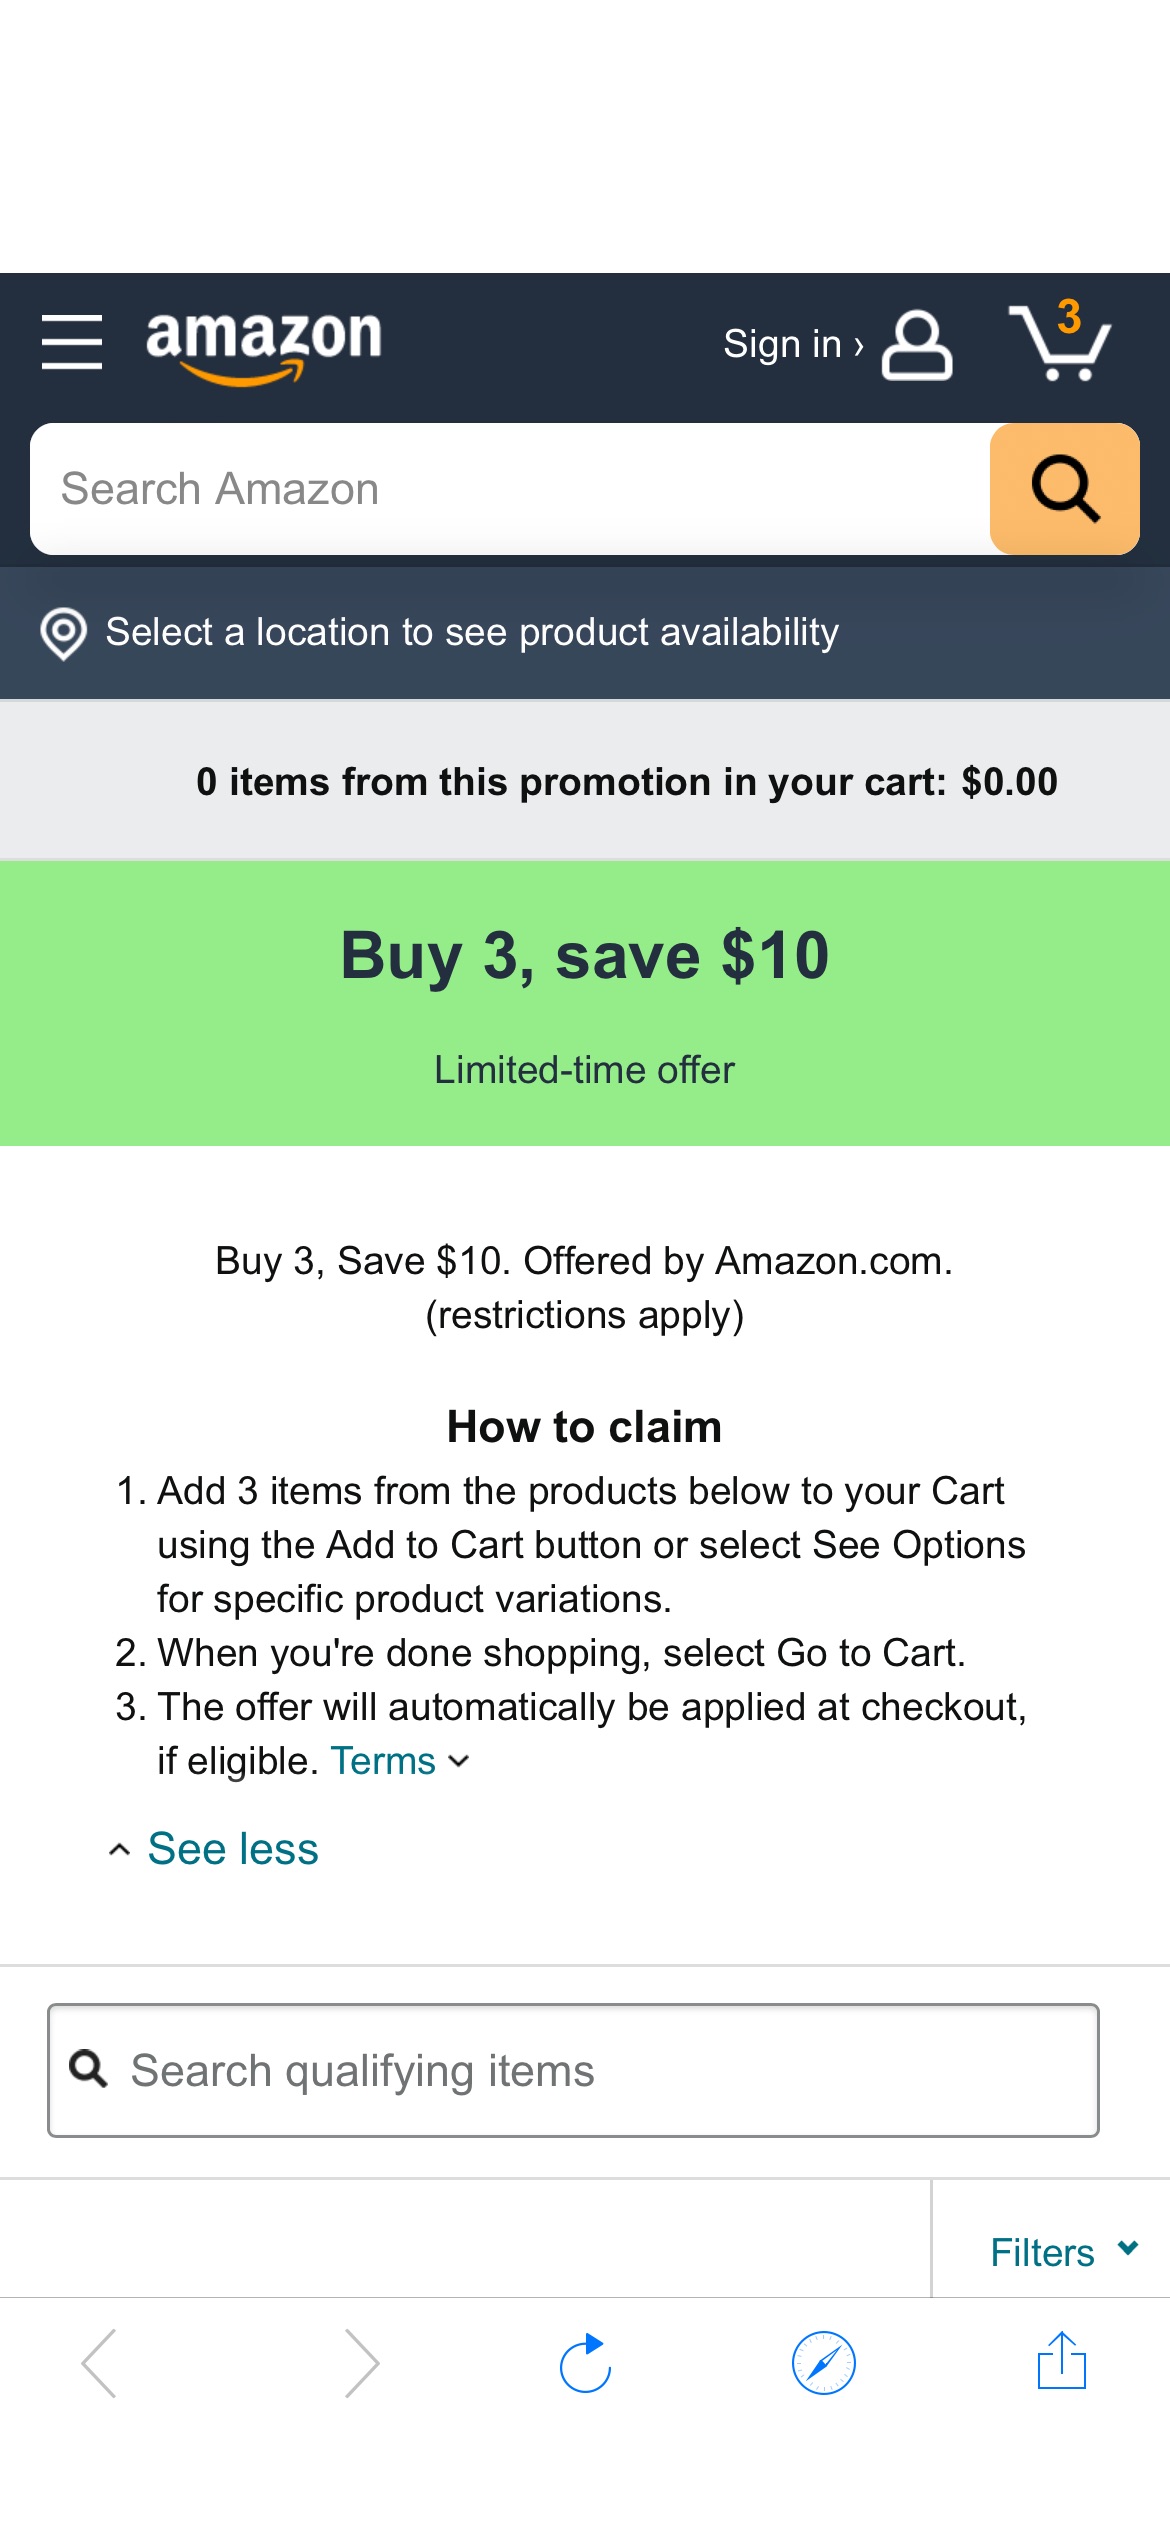 Amazon.com: Buy 3, save $10 promotion